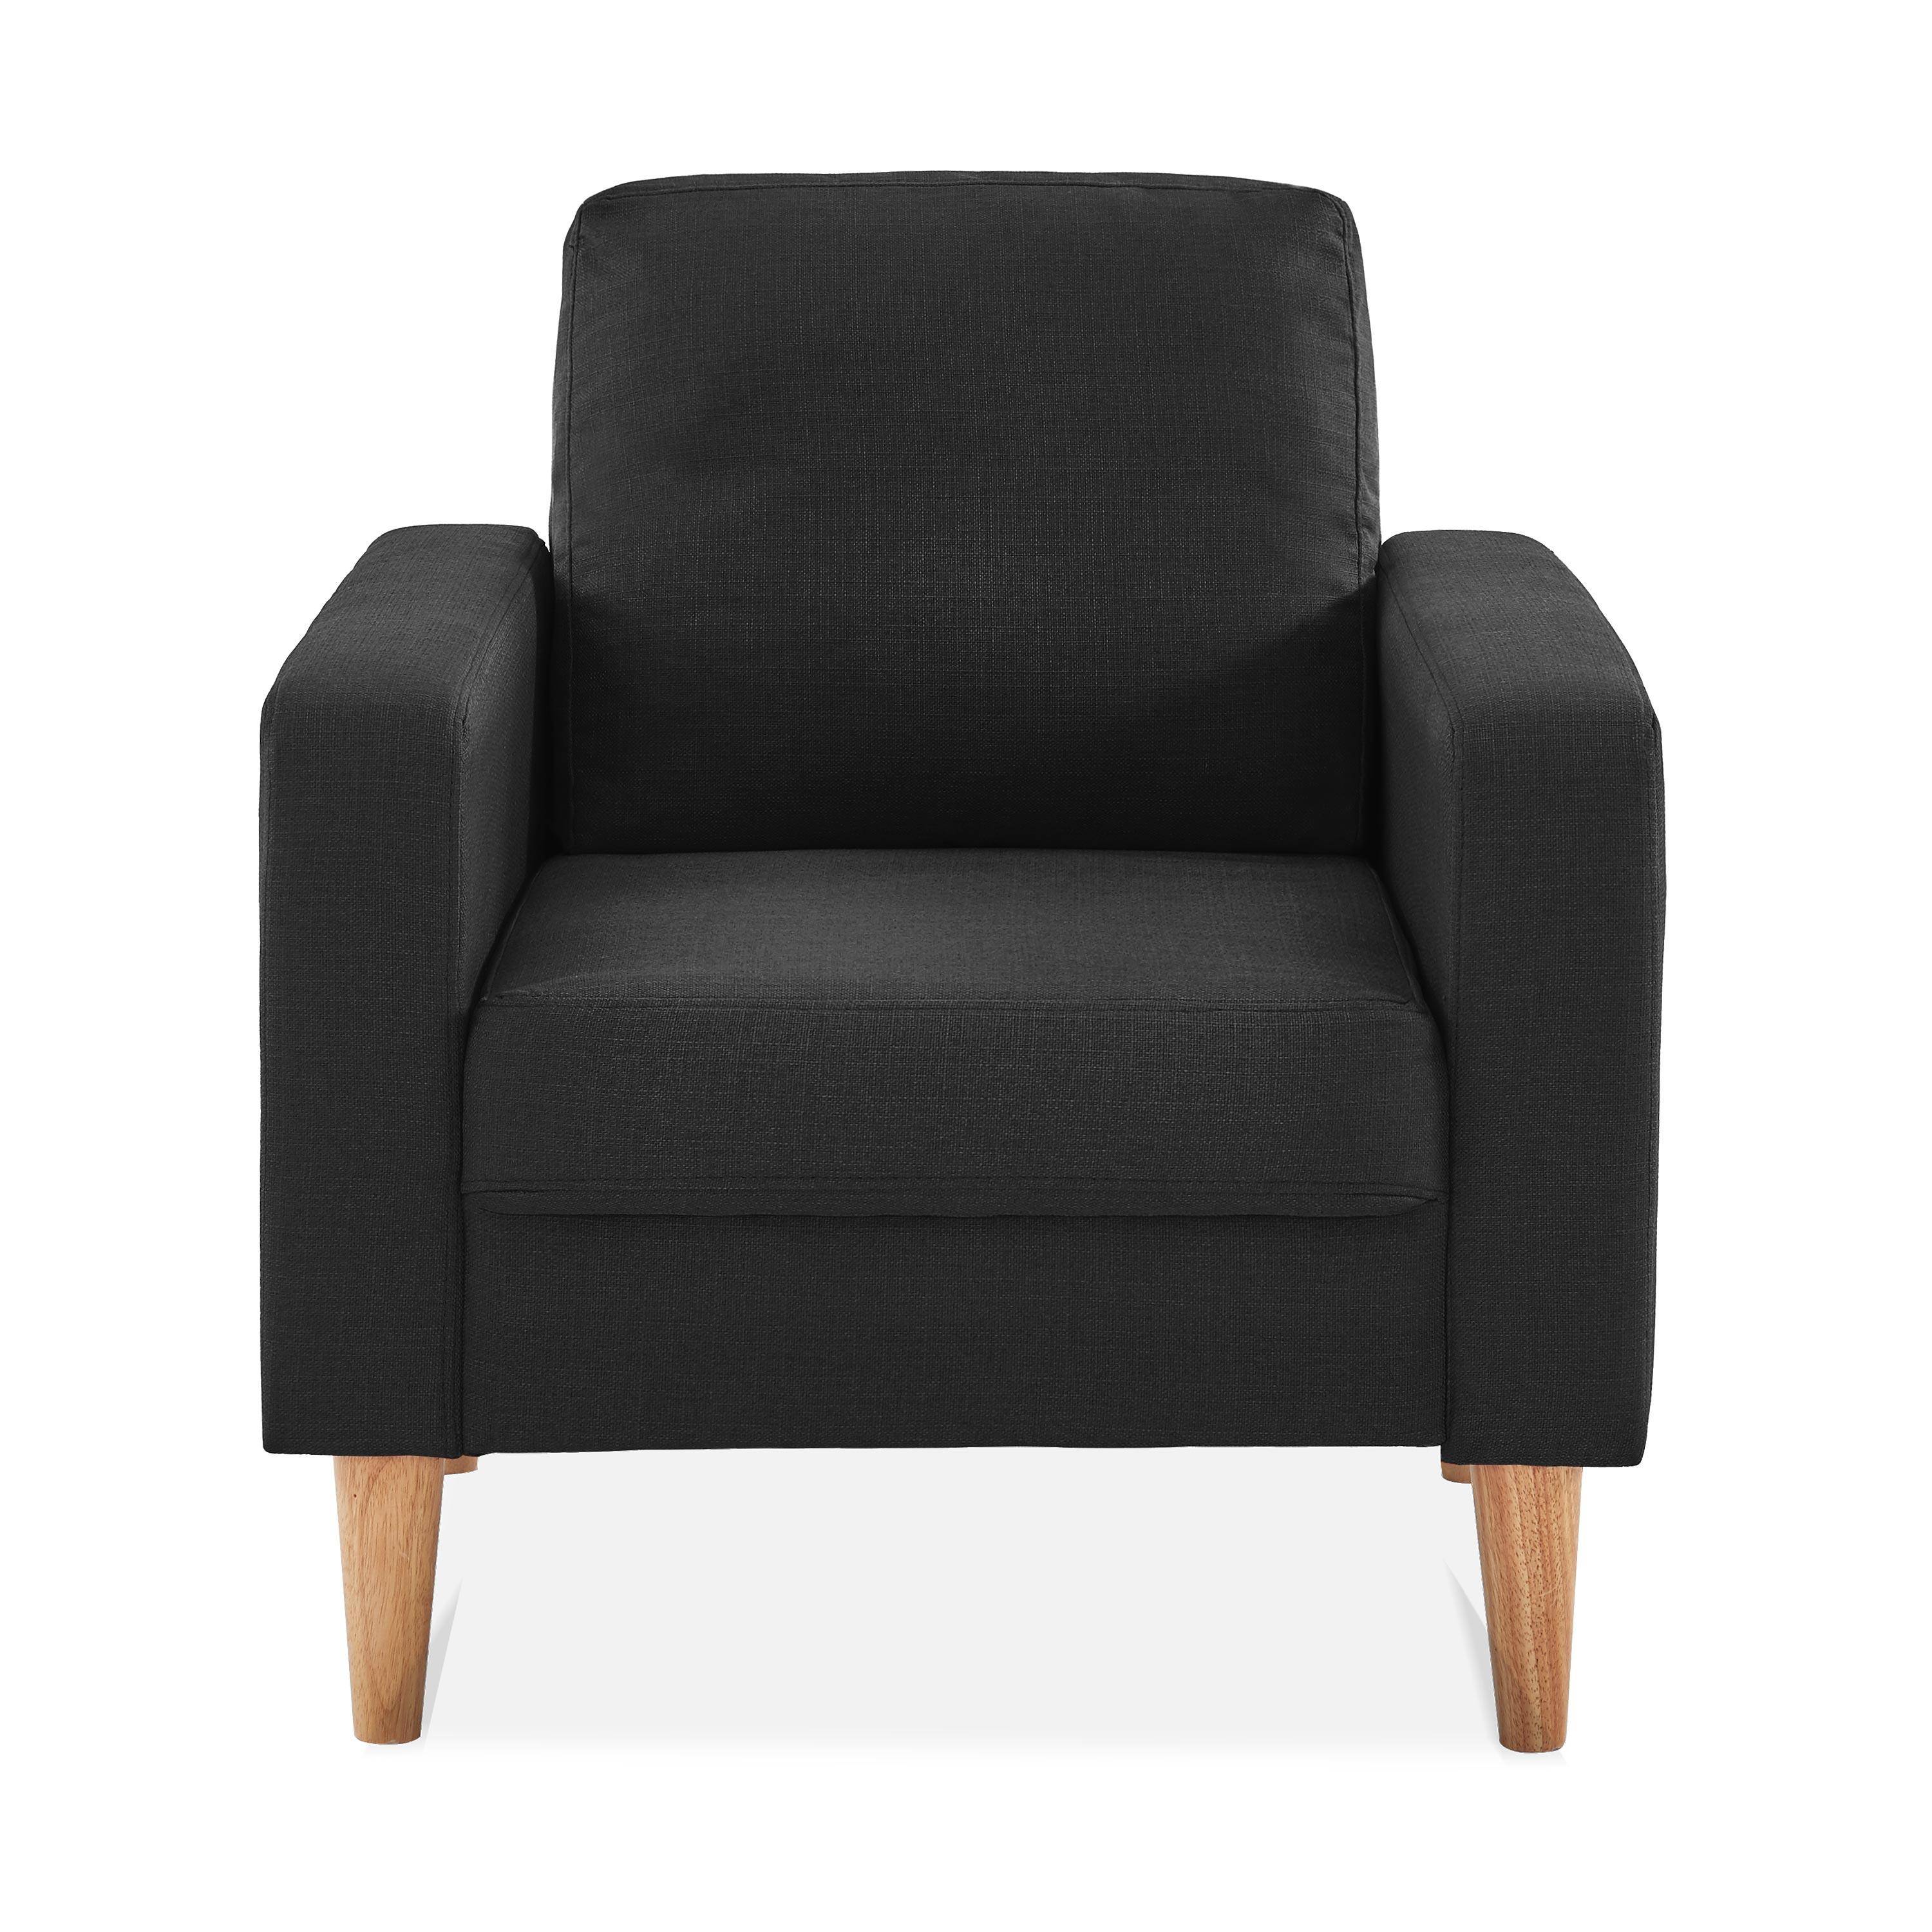 Scandi-style armchair with wooden legs - Bjorn - Dark Grey,sweeek,Photo3